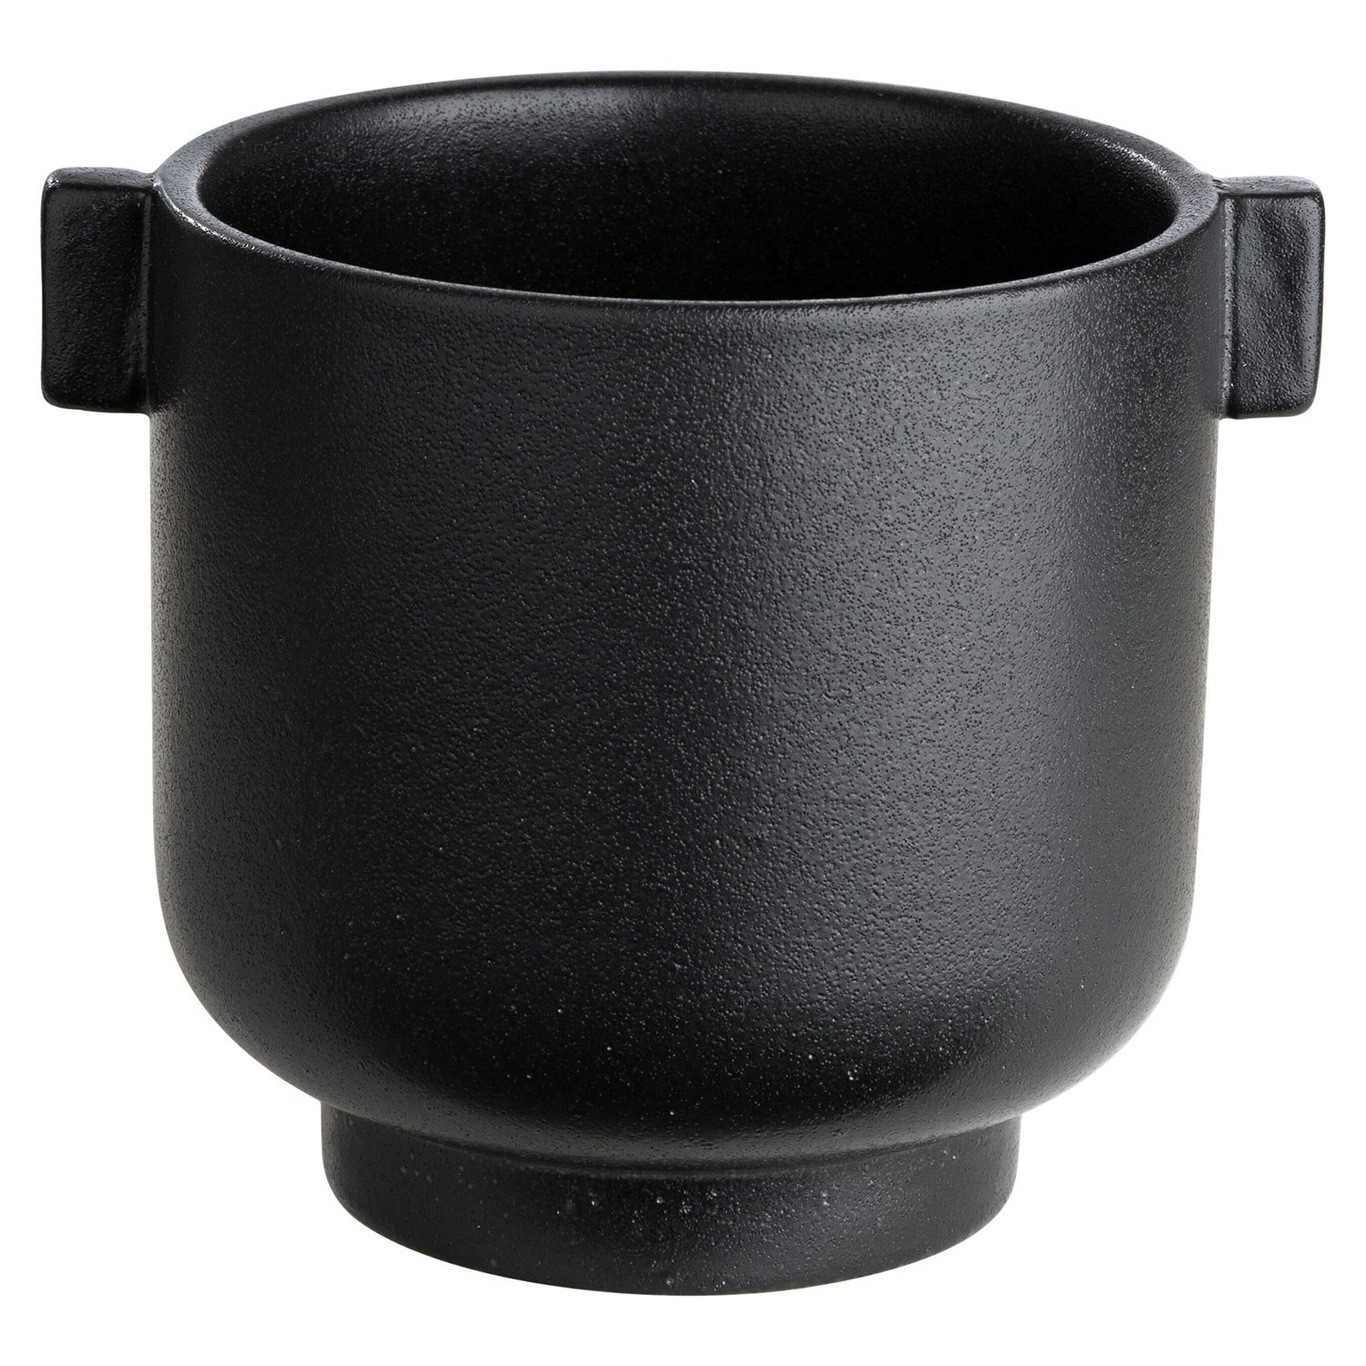 Pot With Ears H14 cm, Black